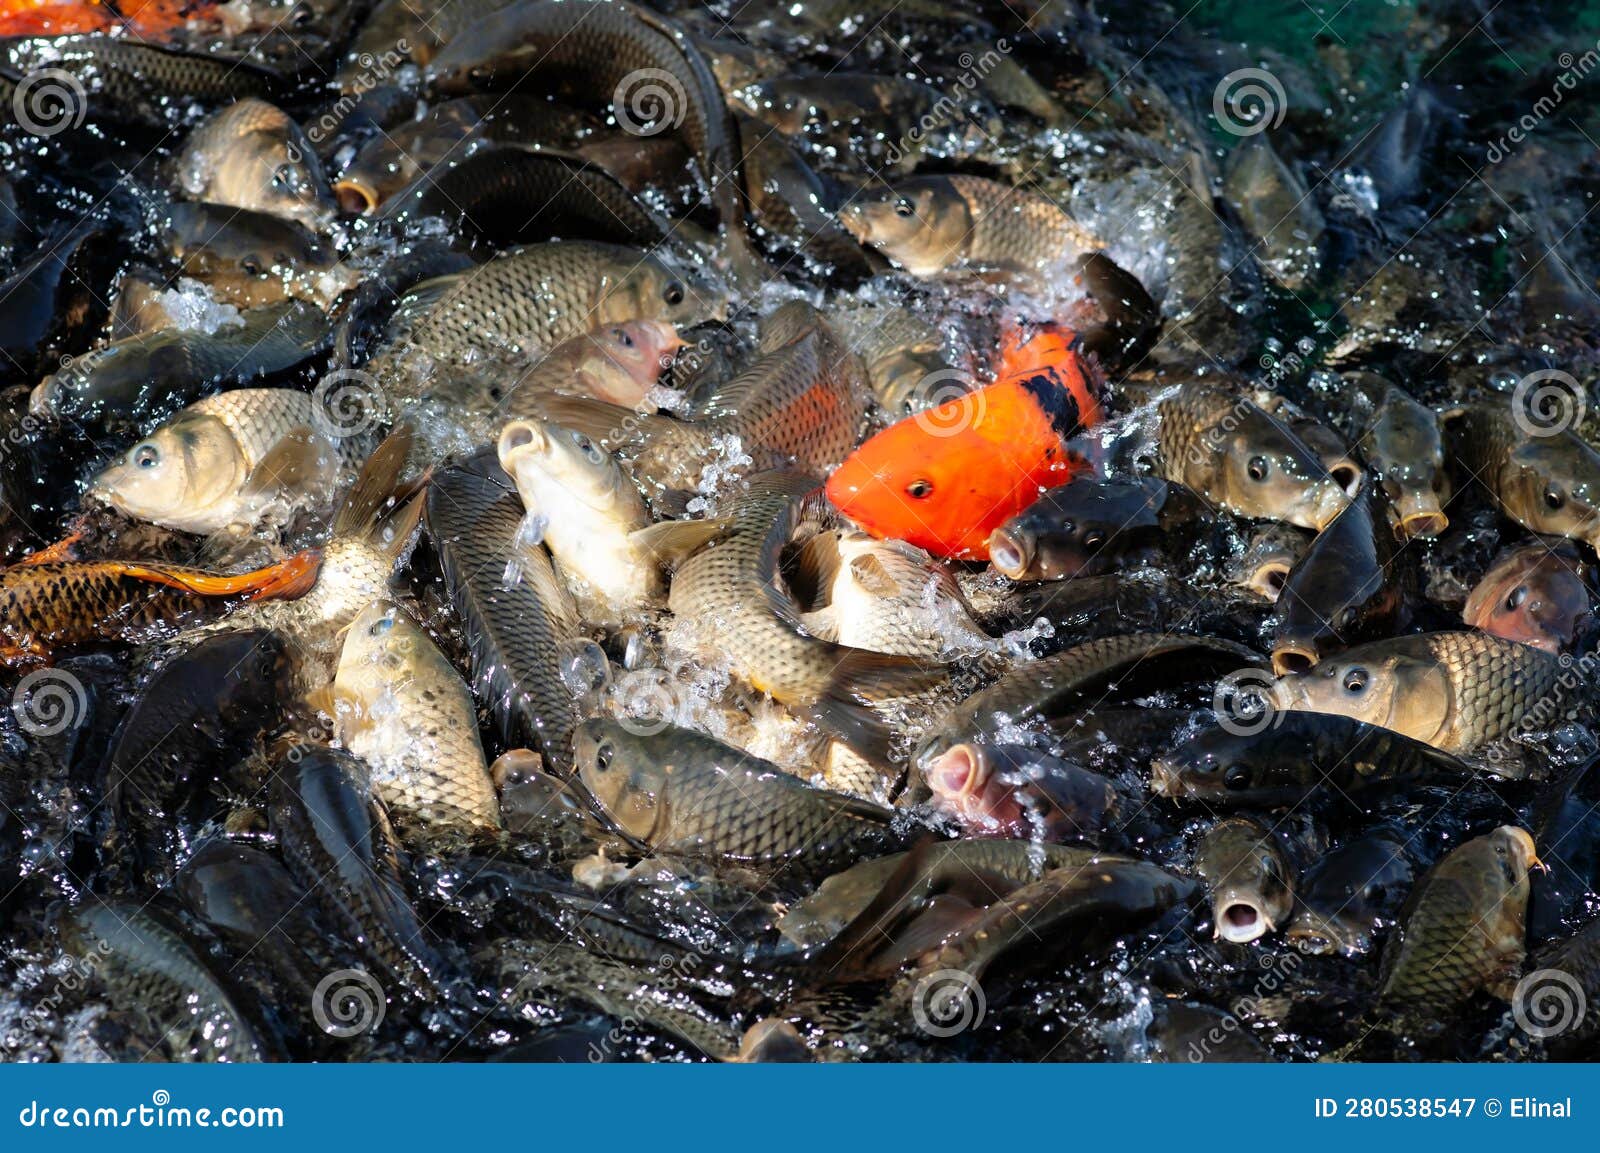 https://thumbs.dreamstime.com/z/carp-golden-carp-lot-fish-water-koi-fishing-carp-golden-carp-lot-fish-water-koi-280538547.jpg